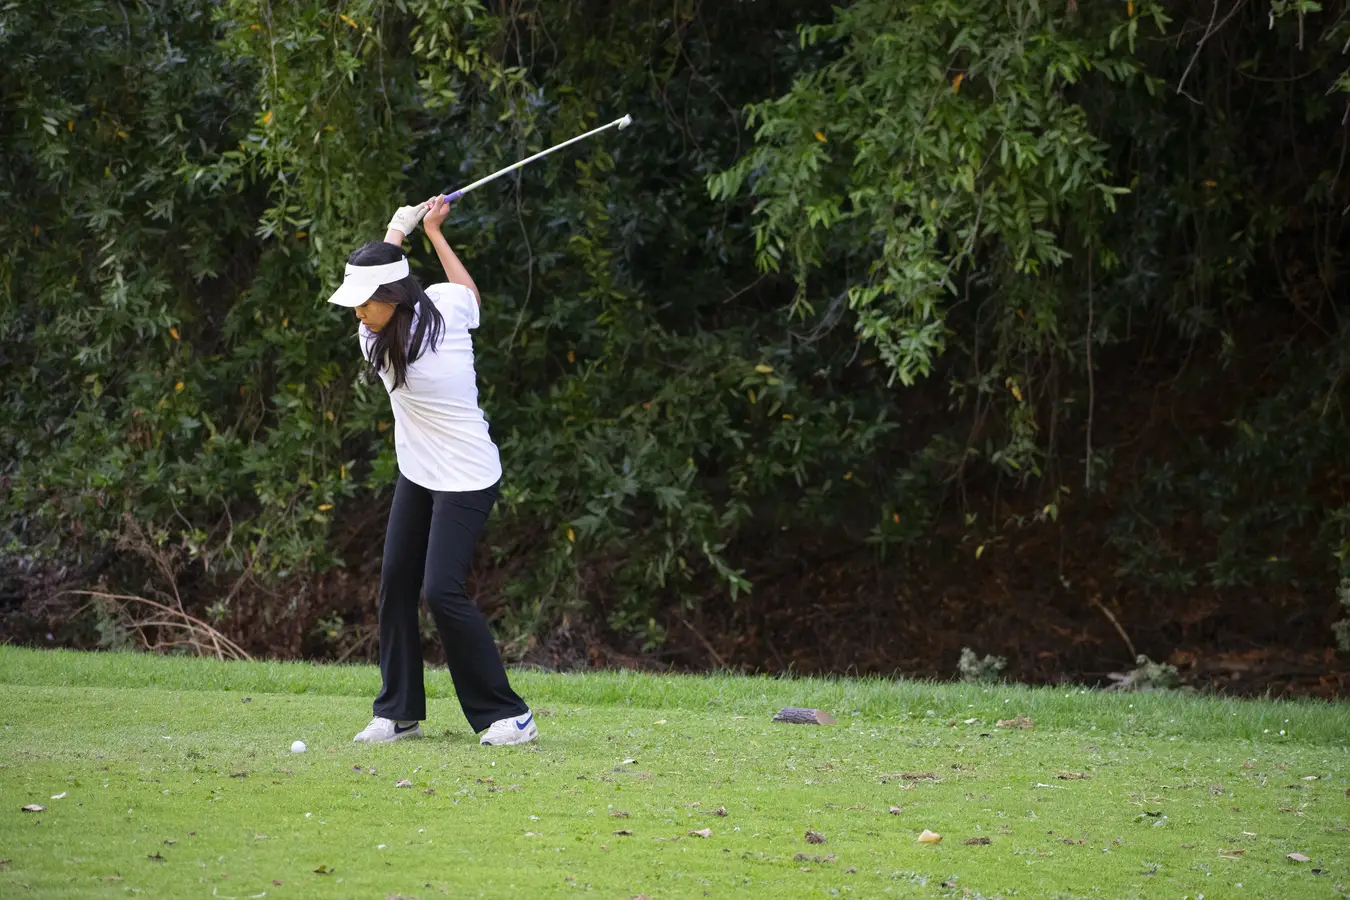 Irvington Girls Golf player Alice Wu tees up, ready to strike the golf ball.